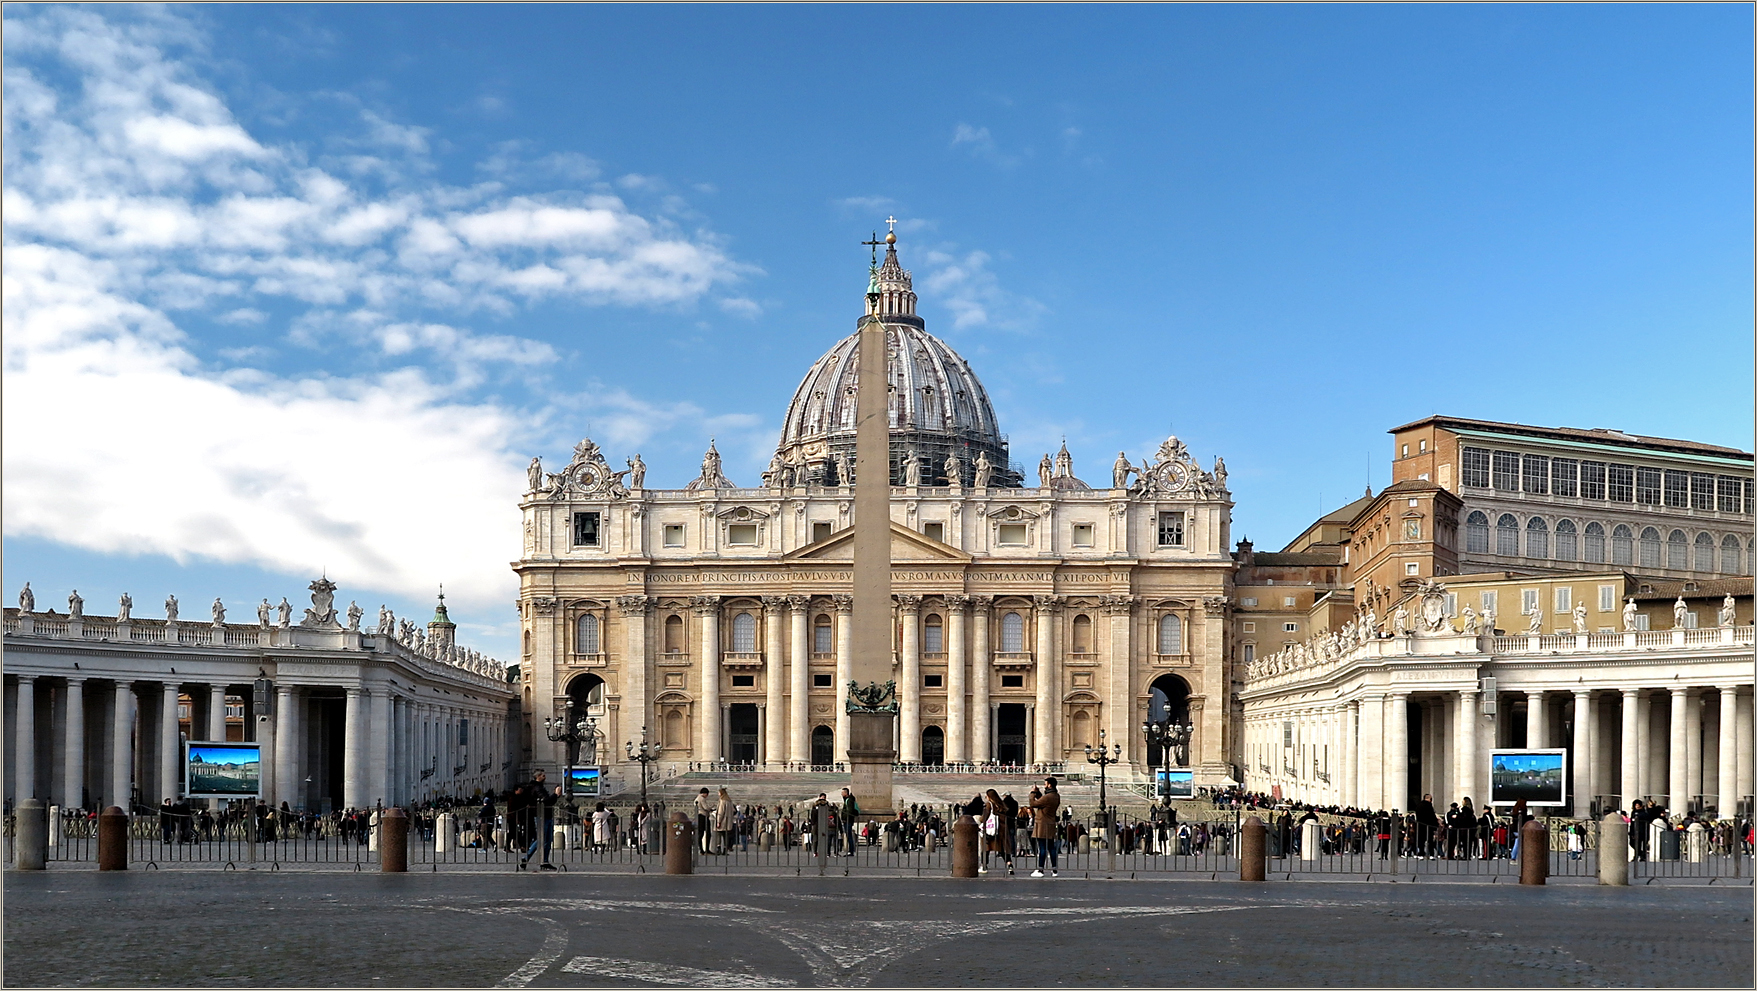 Petersdom - Vatikan